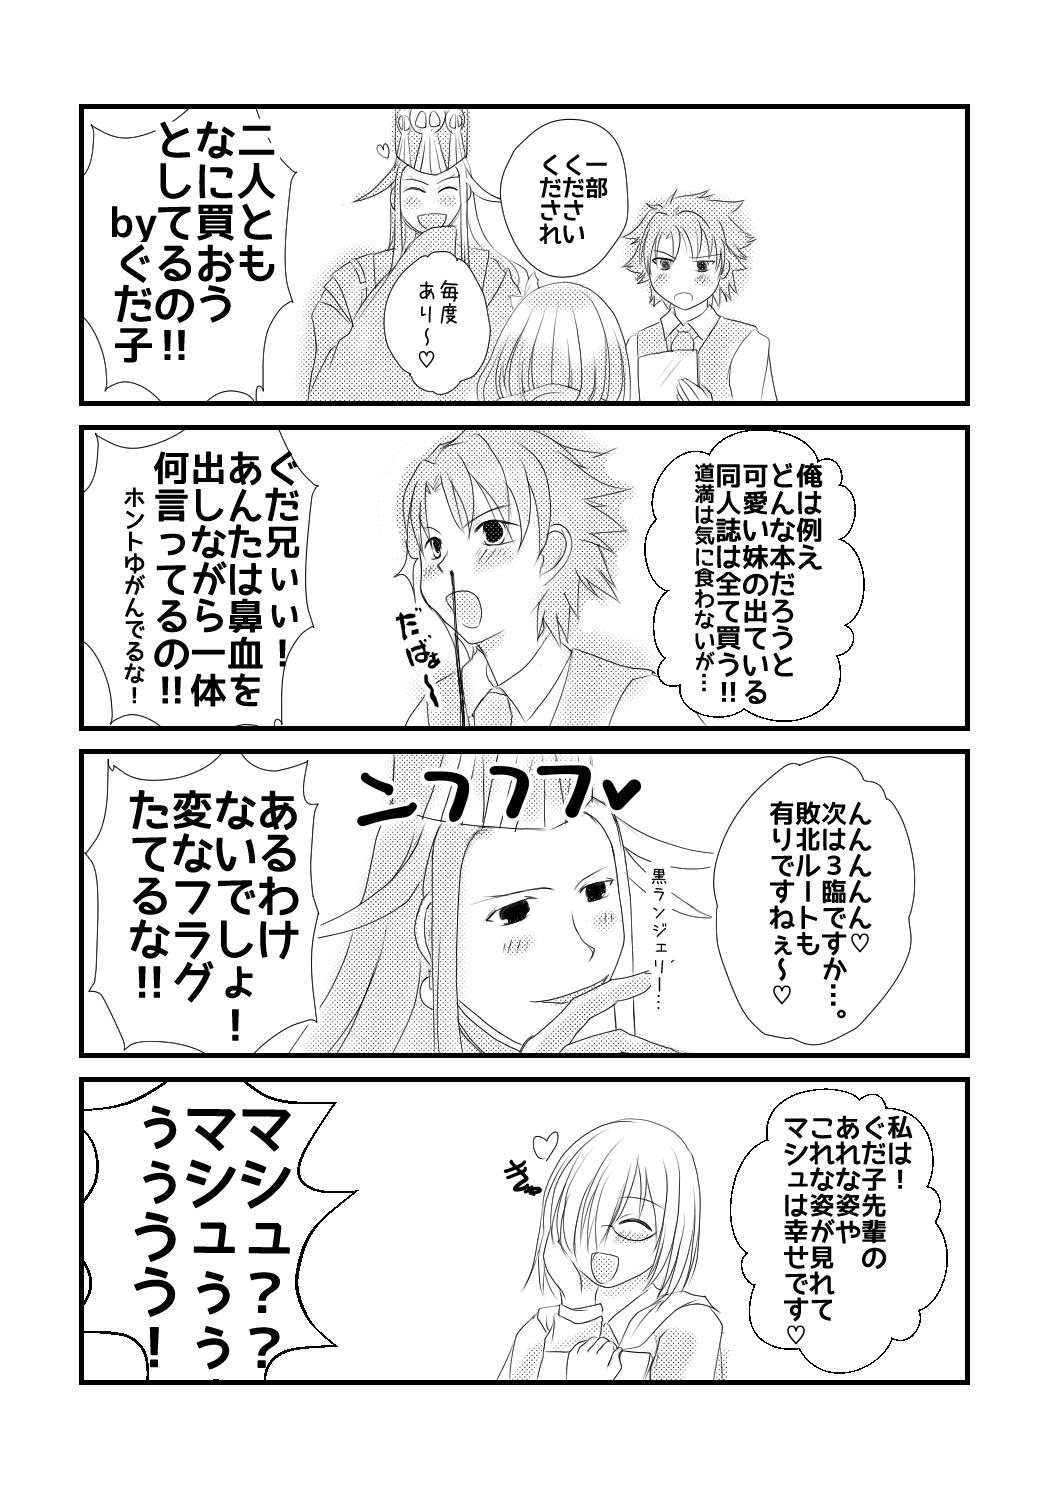 Pussy Orgasm ] Rin guda ♀ rakugaki guda yuru manga(Fate/Grand Order] - Fate grand order Family Sex - Page 7